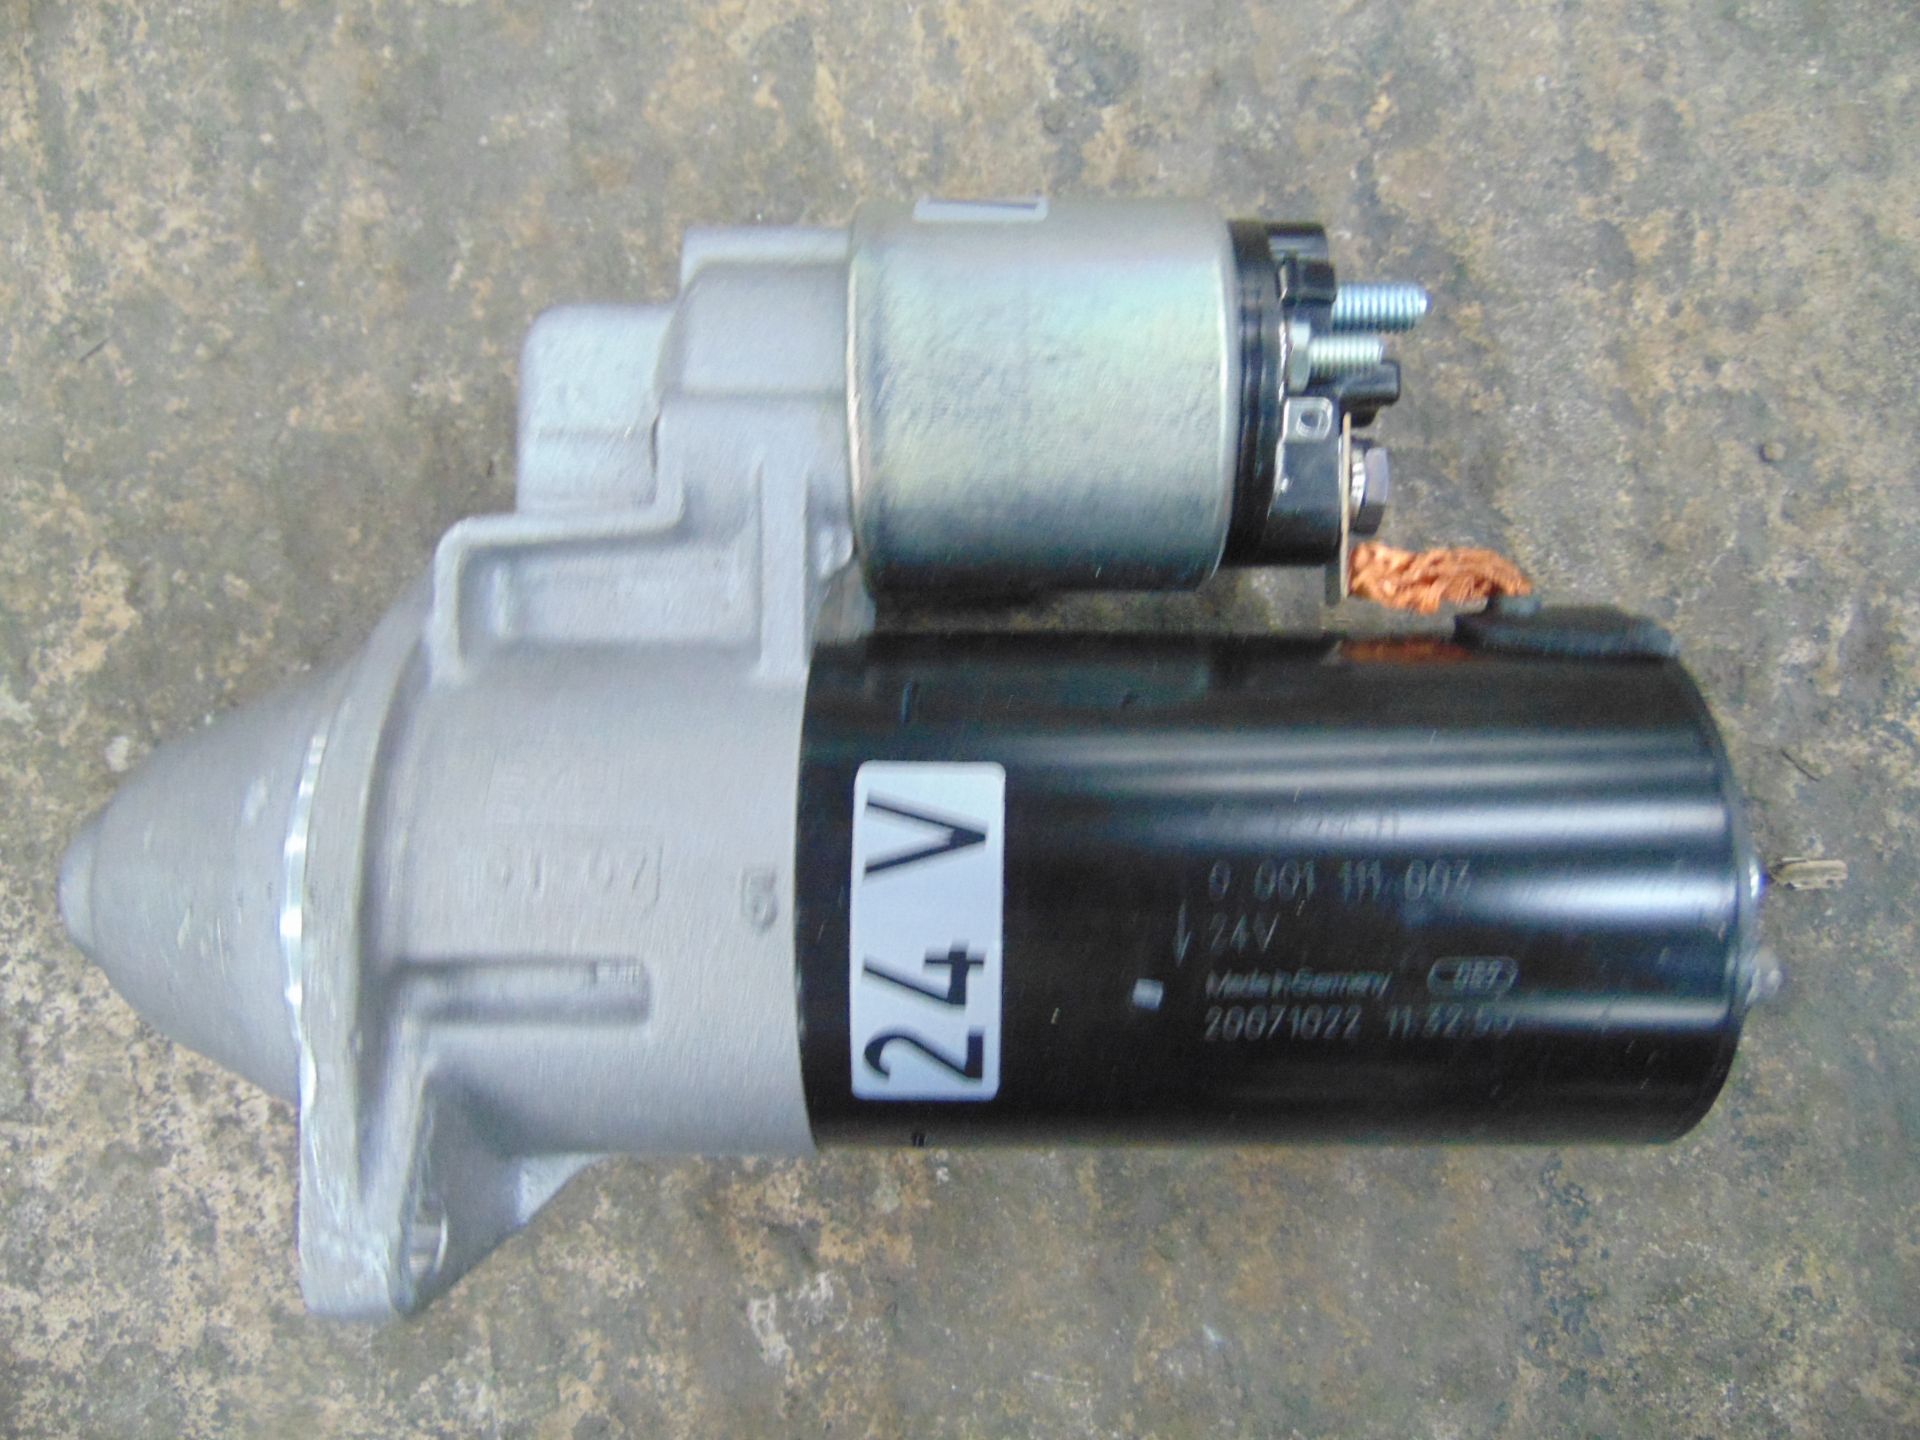 2 x Bosch Starter Motor. P/No 0 001 111 003 - Image 5 of 7